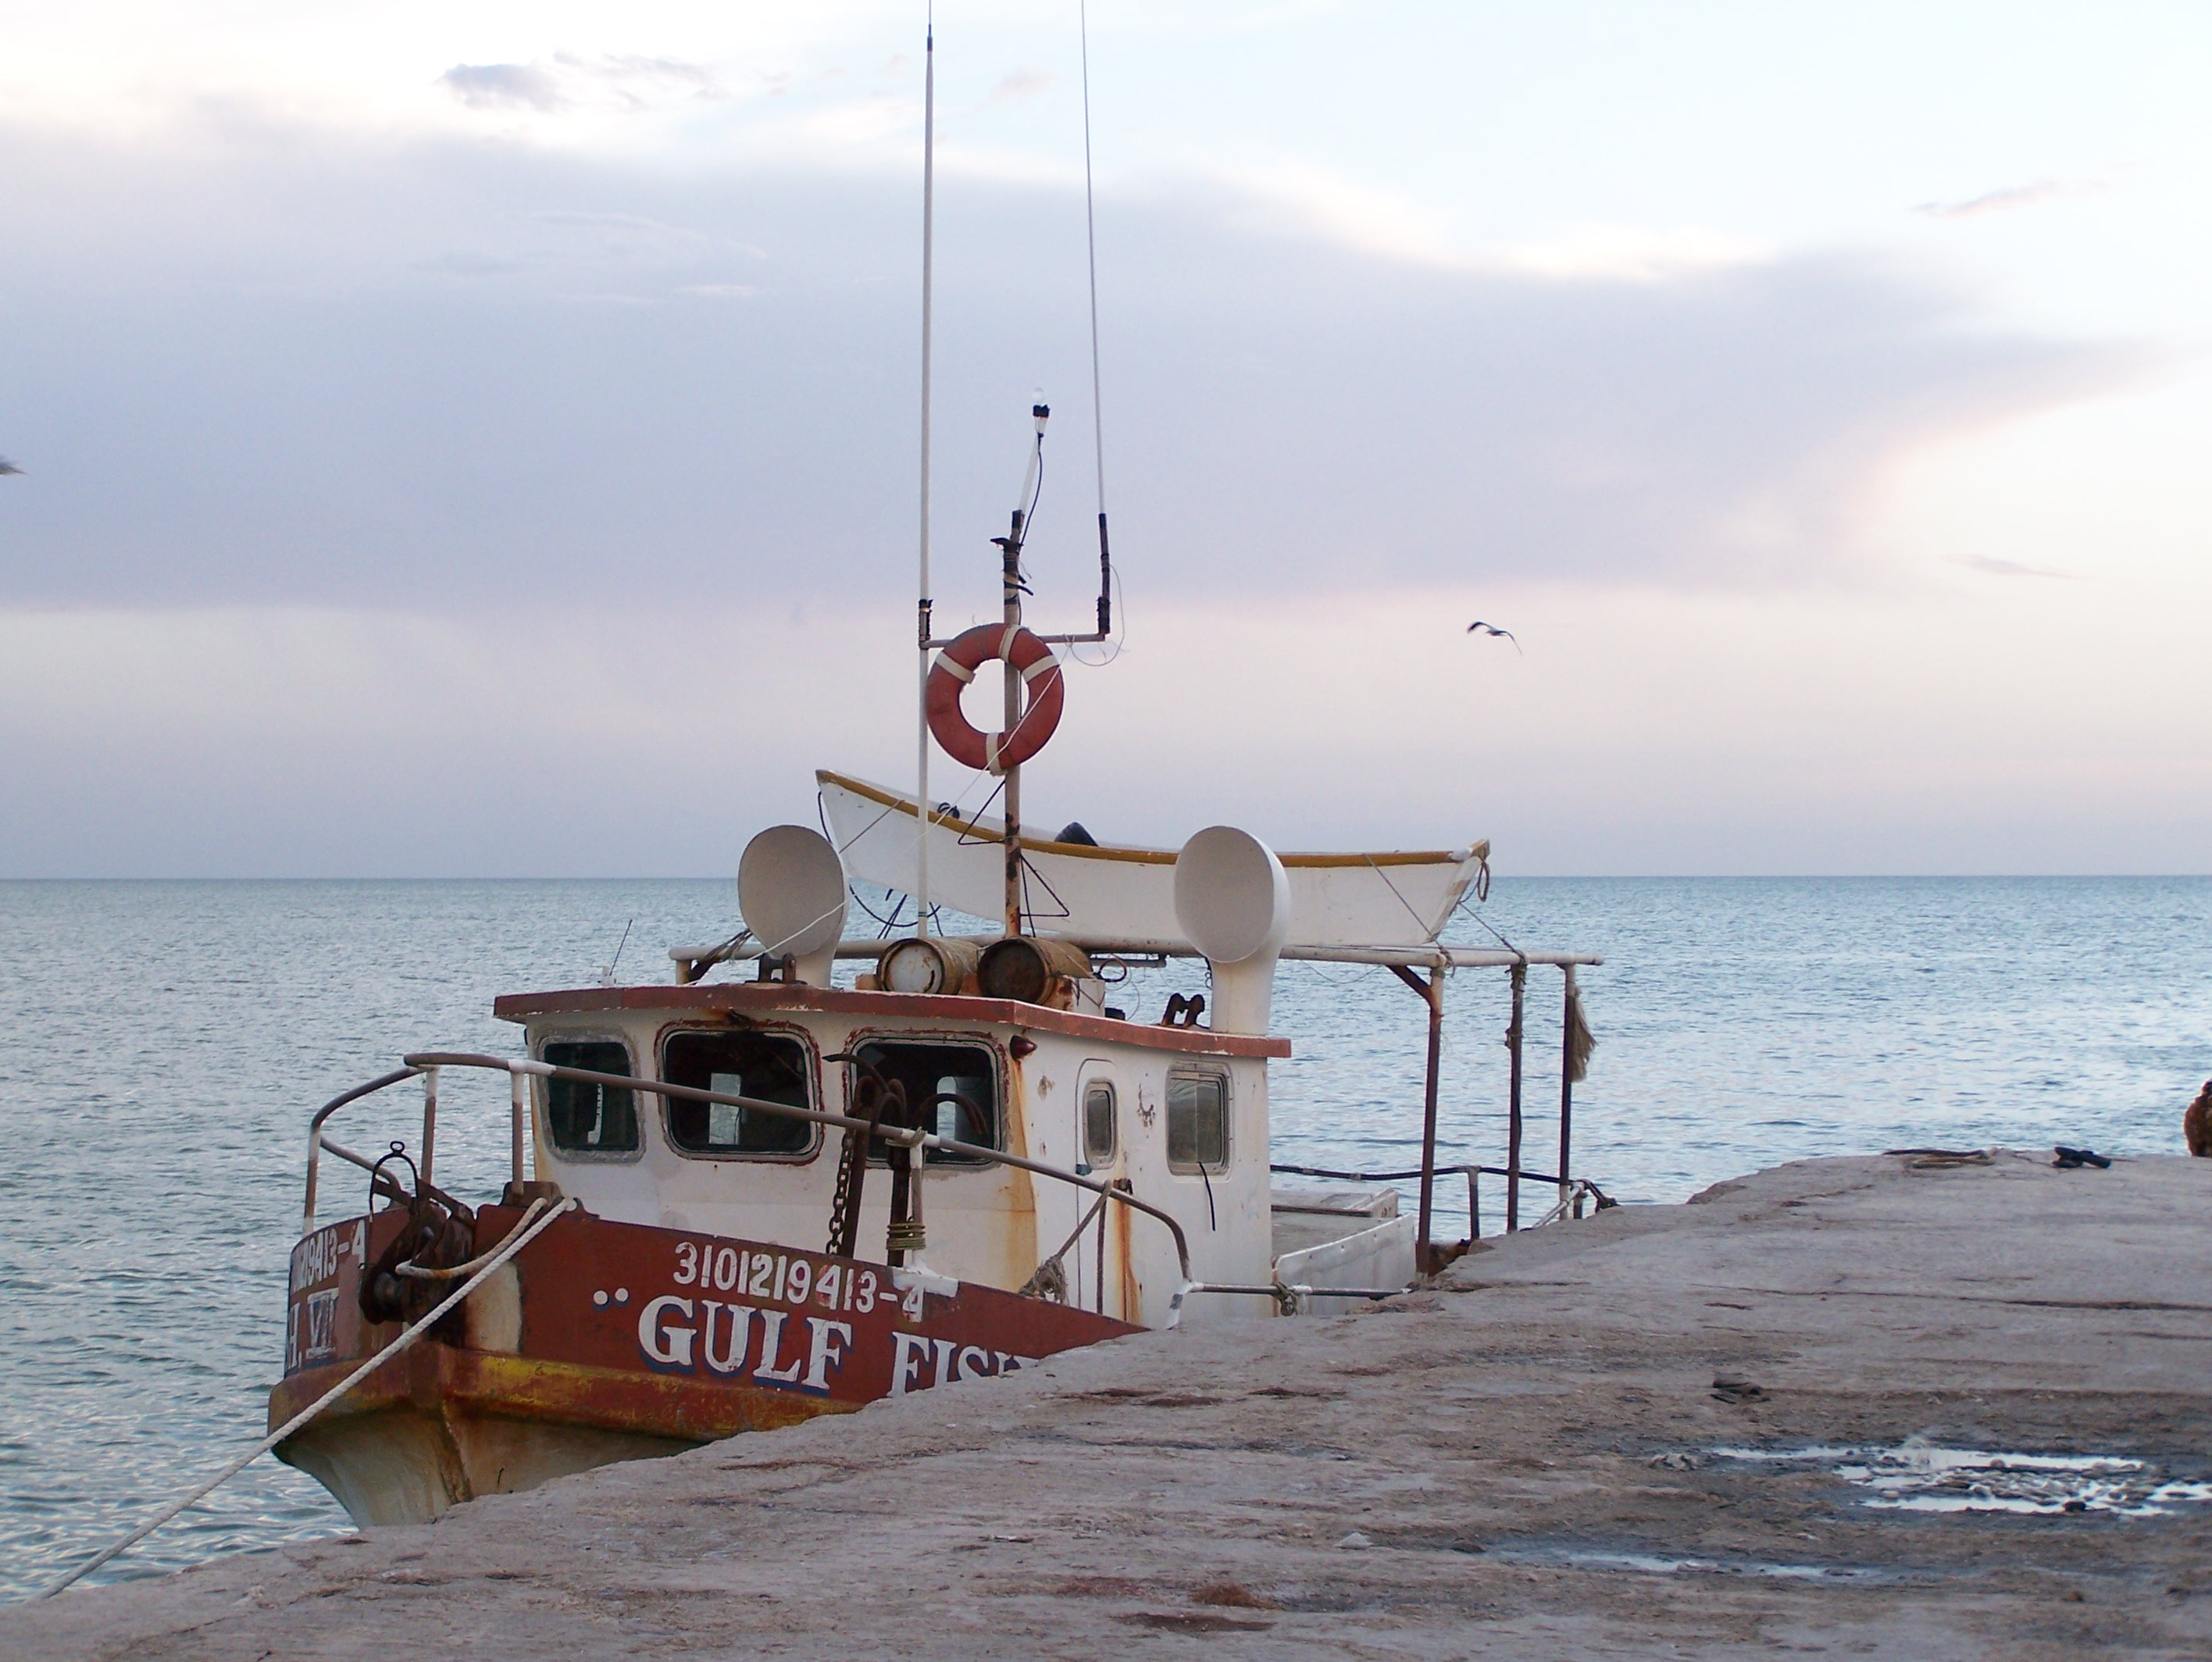 File:Old fishing boat.JPG - Wikimedia Commons